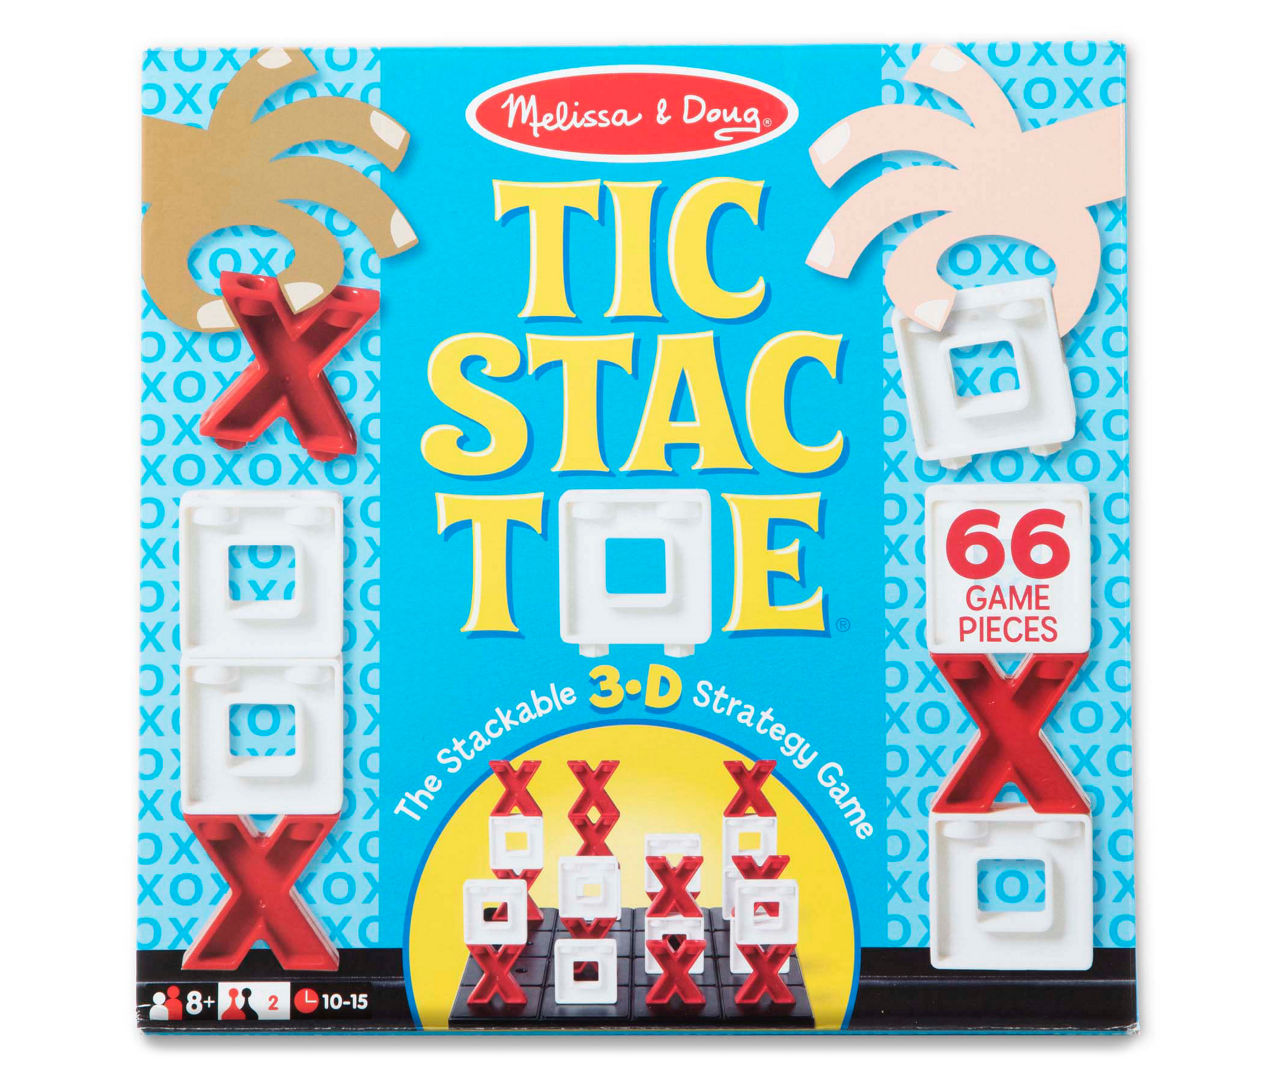 3D Tic Tac Toe Multi-level Strategy Game Printable 2 